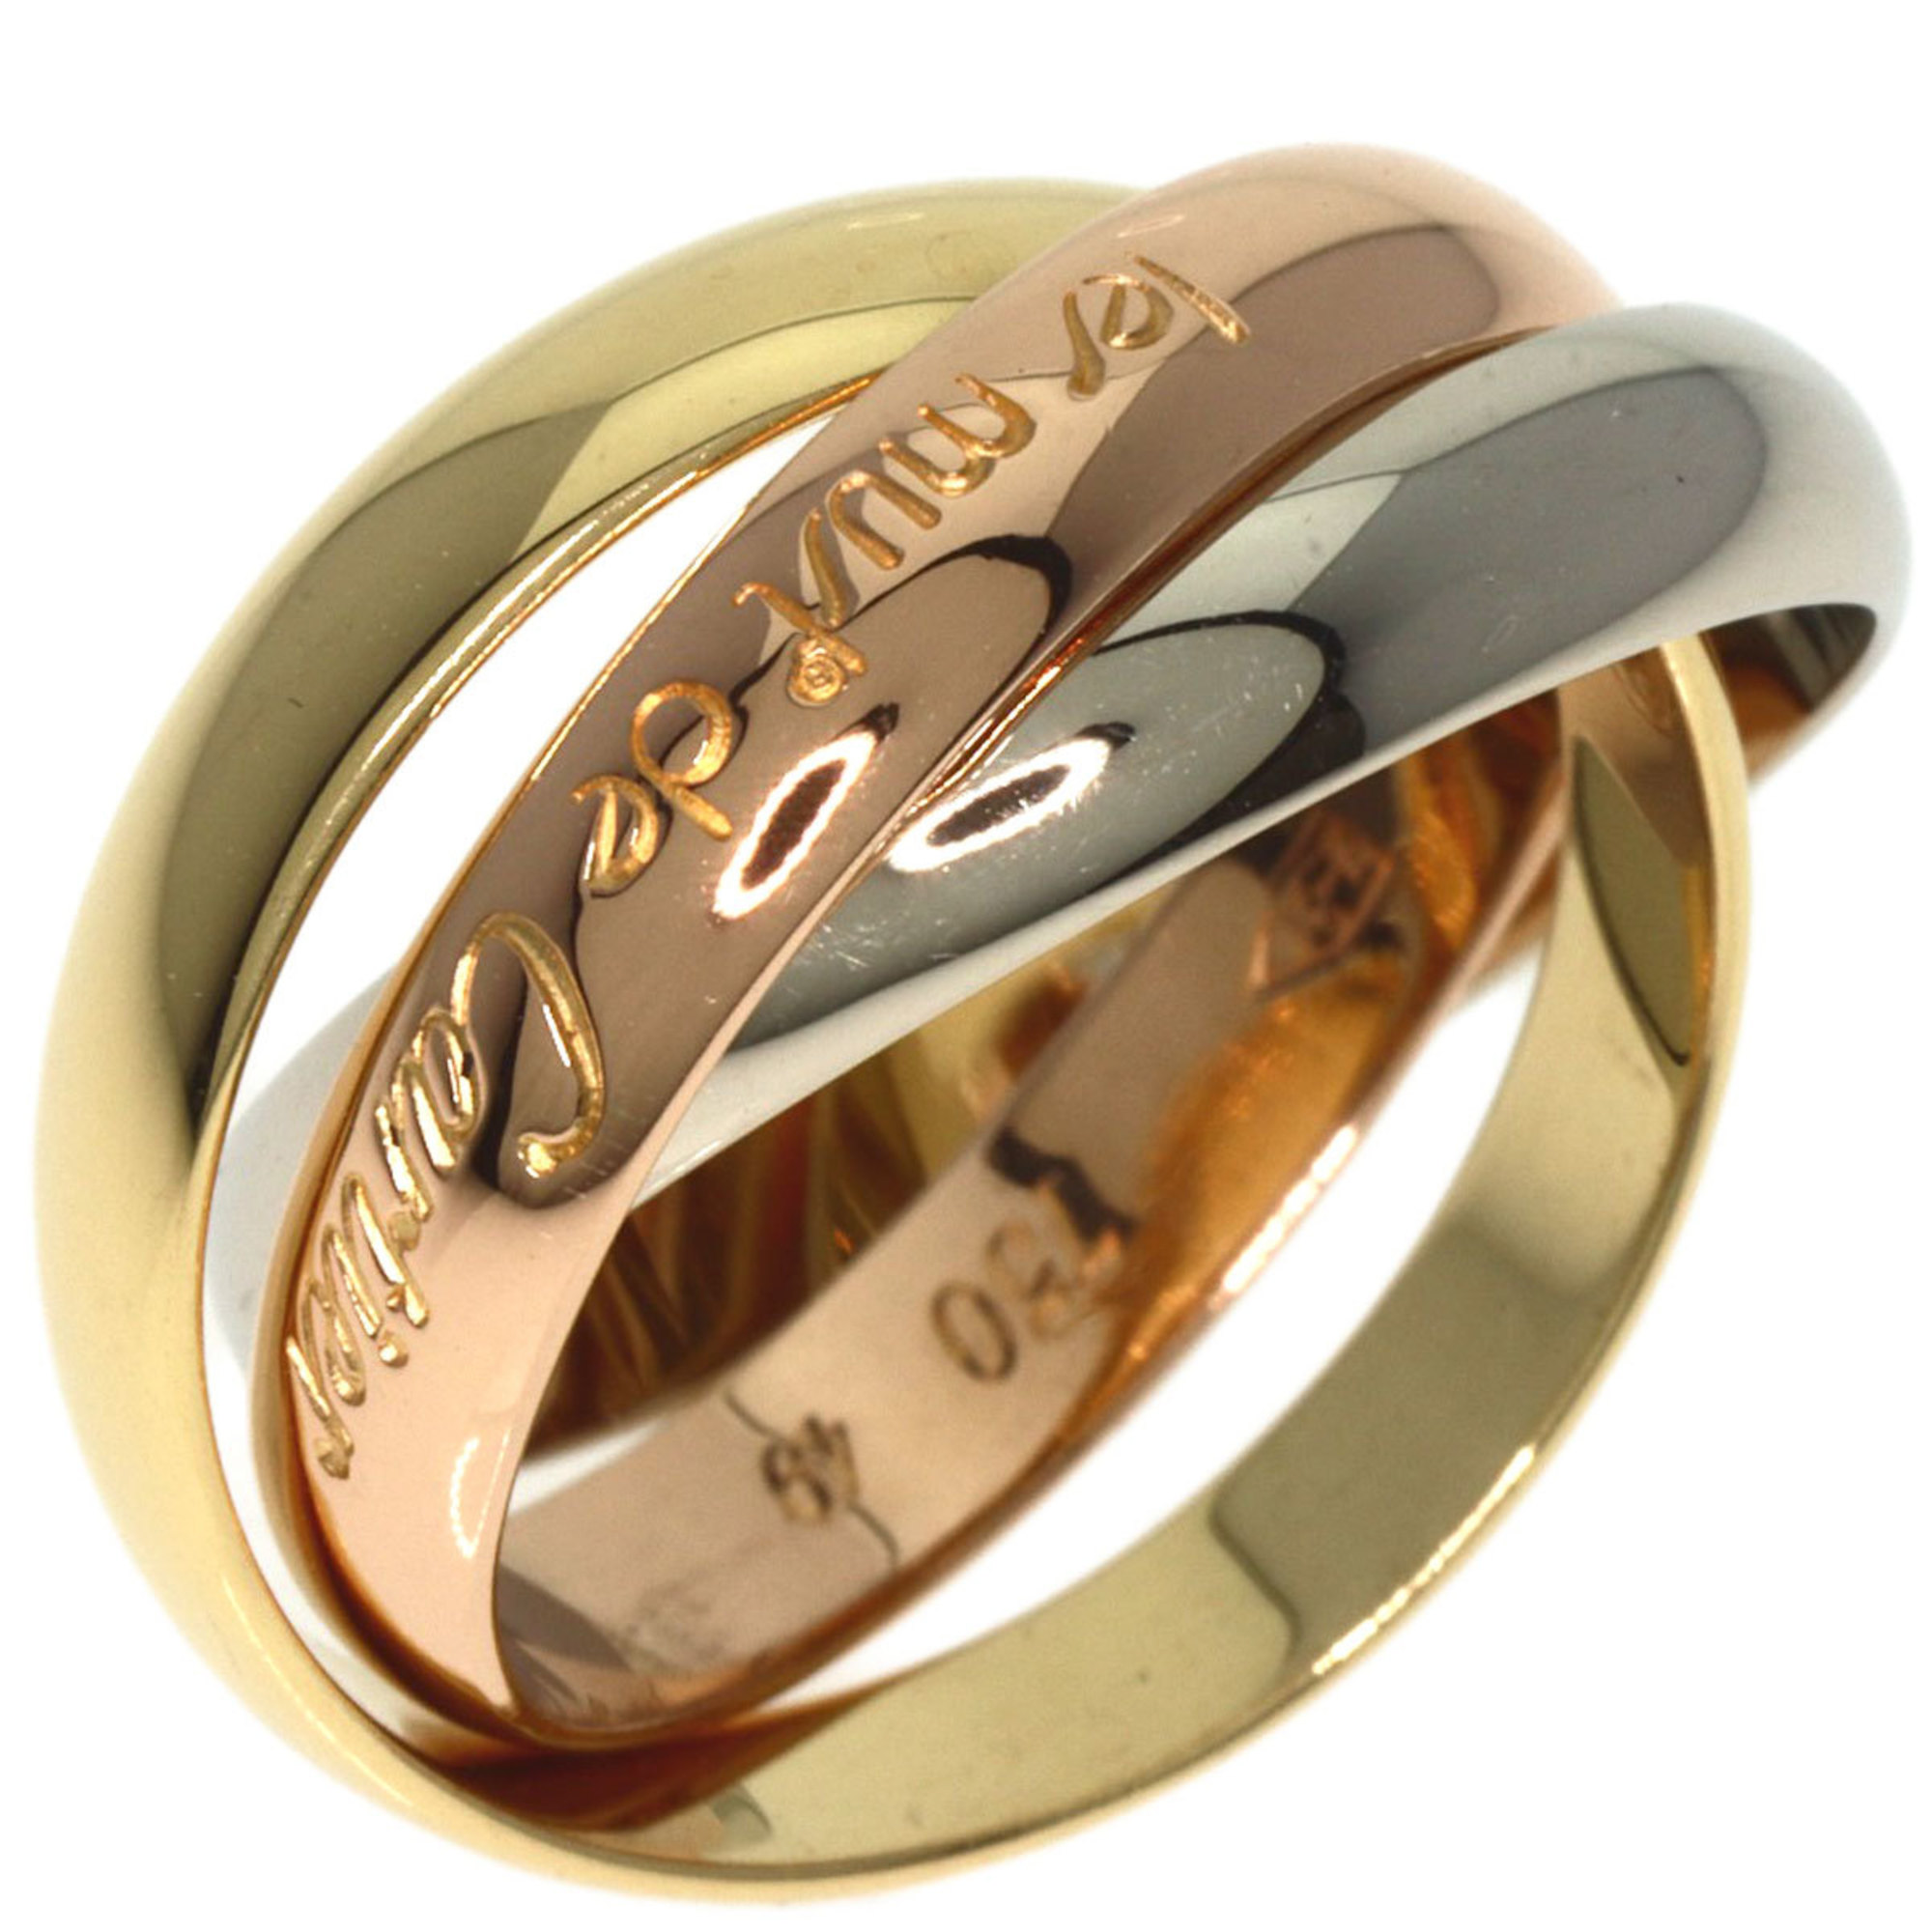 Cartier Trinity #49 Ring, K18 Yellow Gold/K18WG/K18PG, Women's, CARTIER